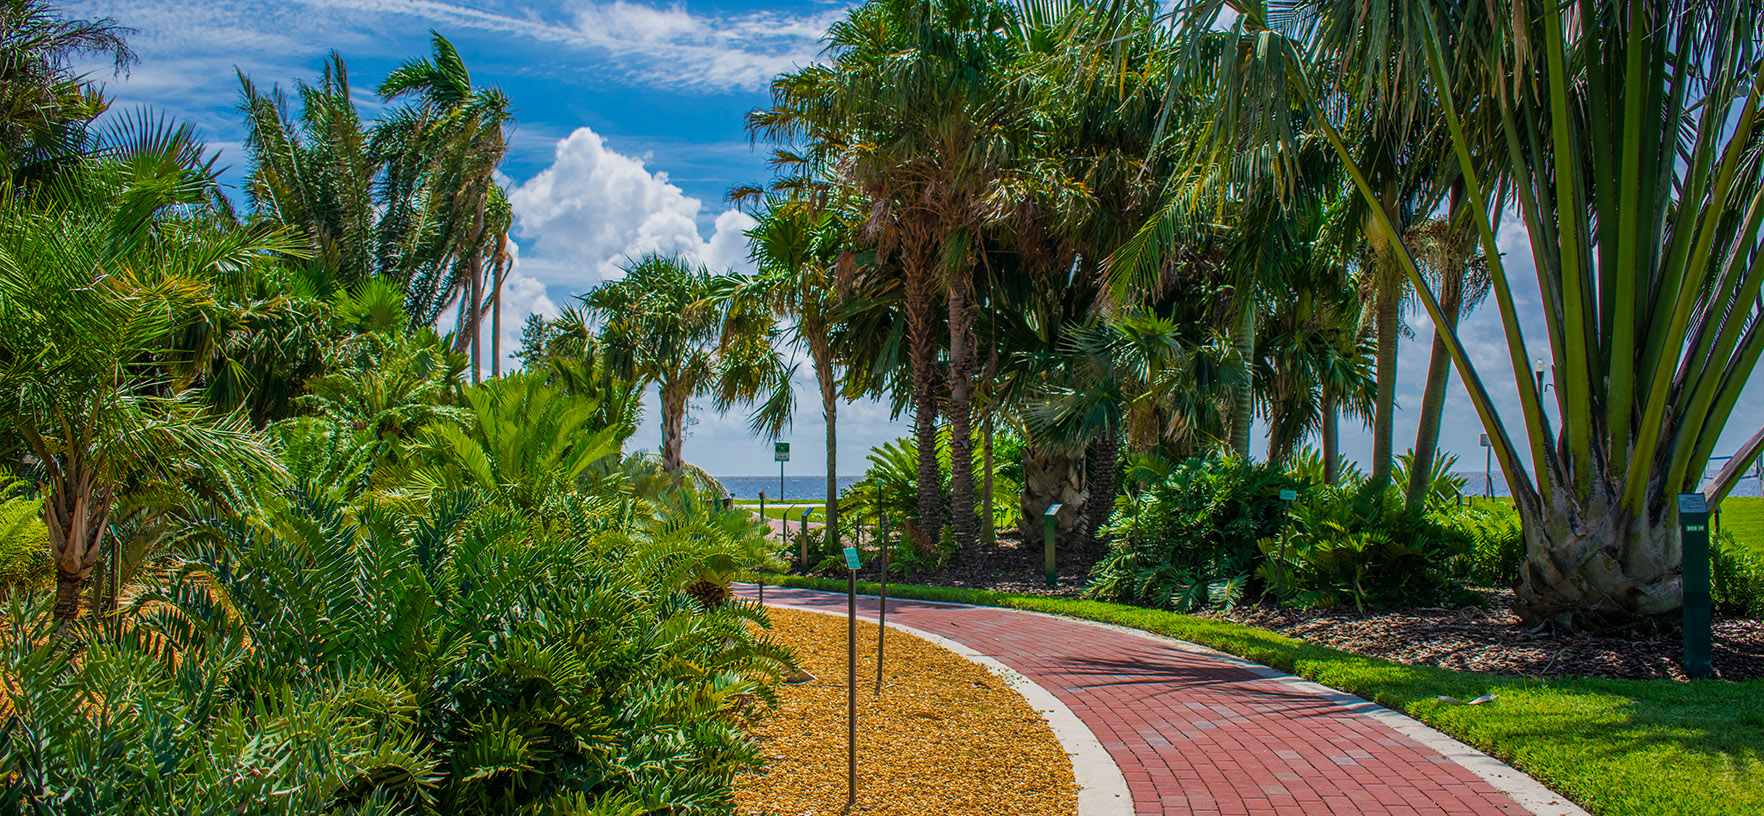 Gizella Kopsick Palm Arboretum Path